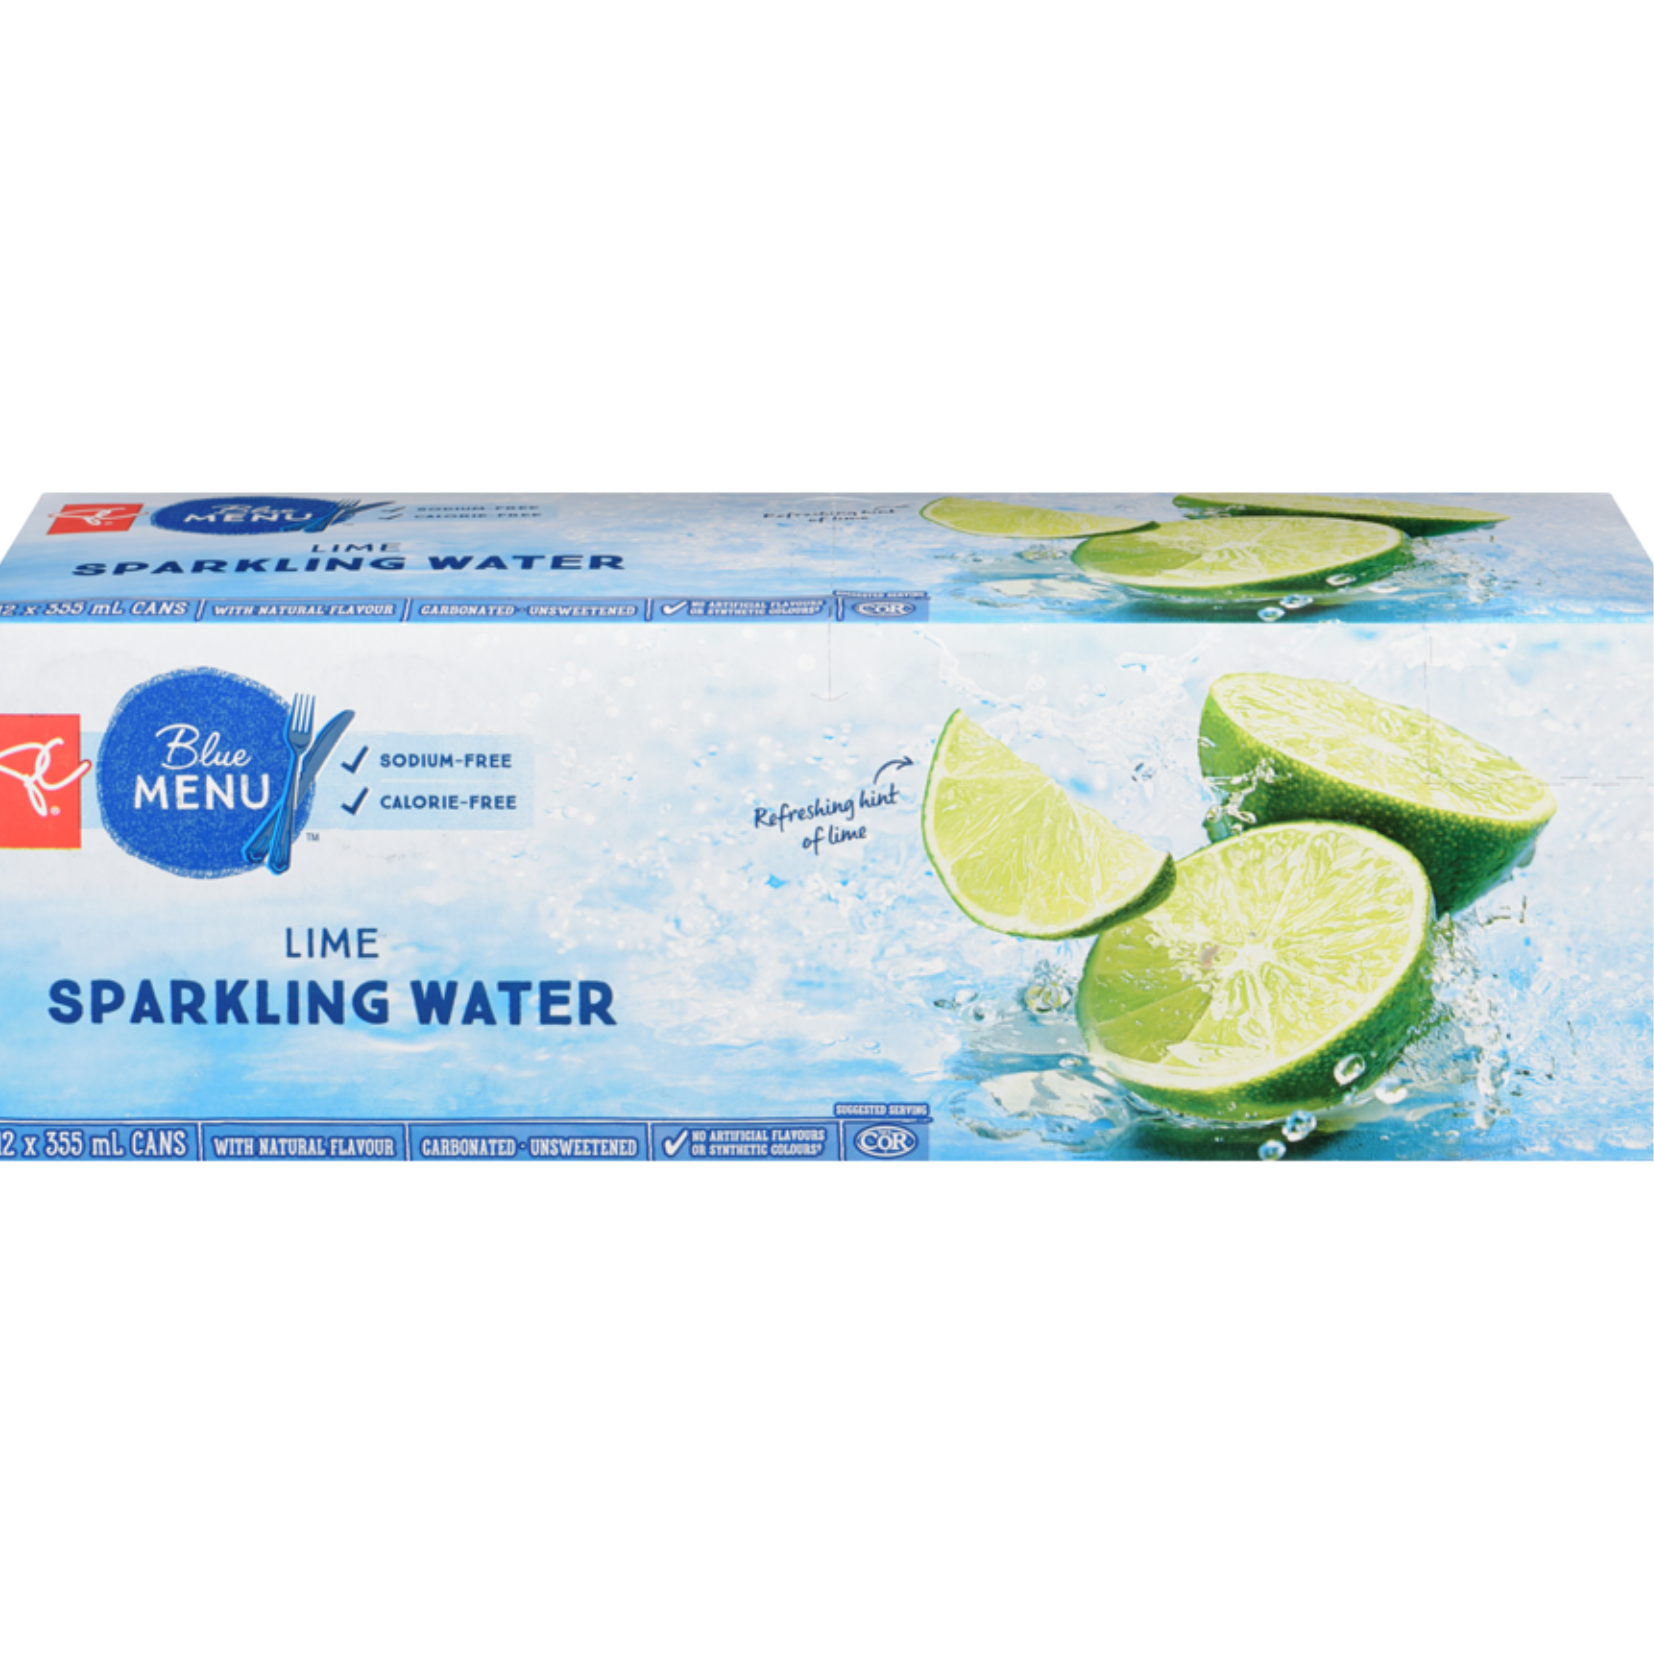 Blue Menu Lime Sparkling Water 355ml x 12